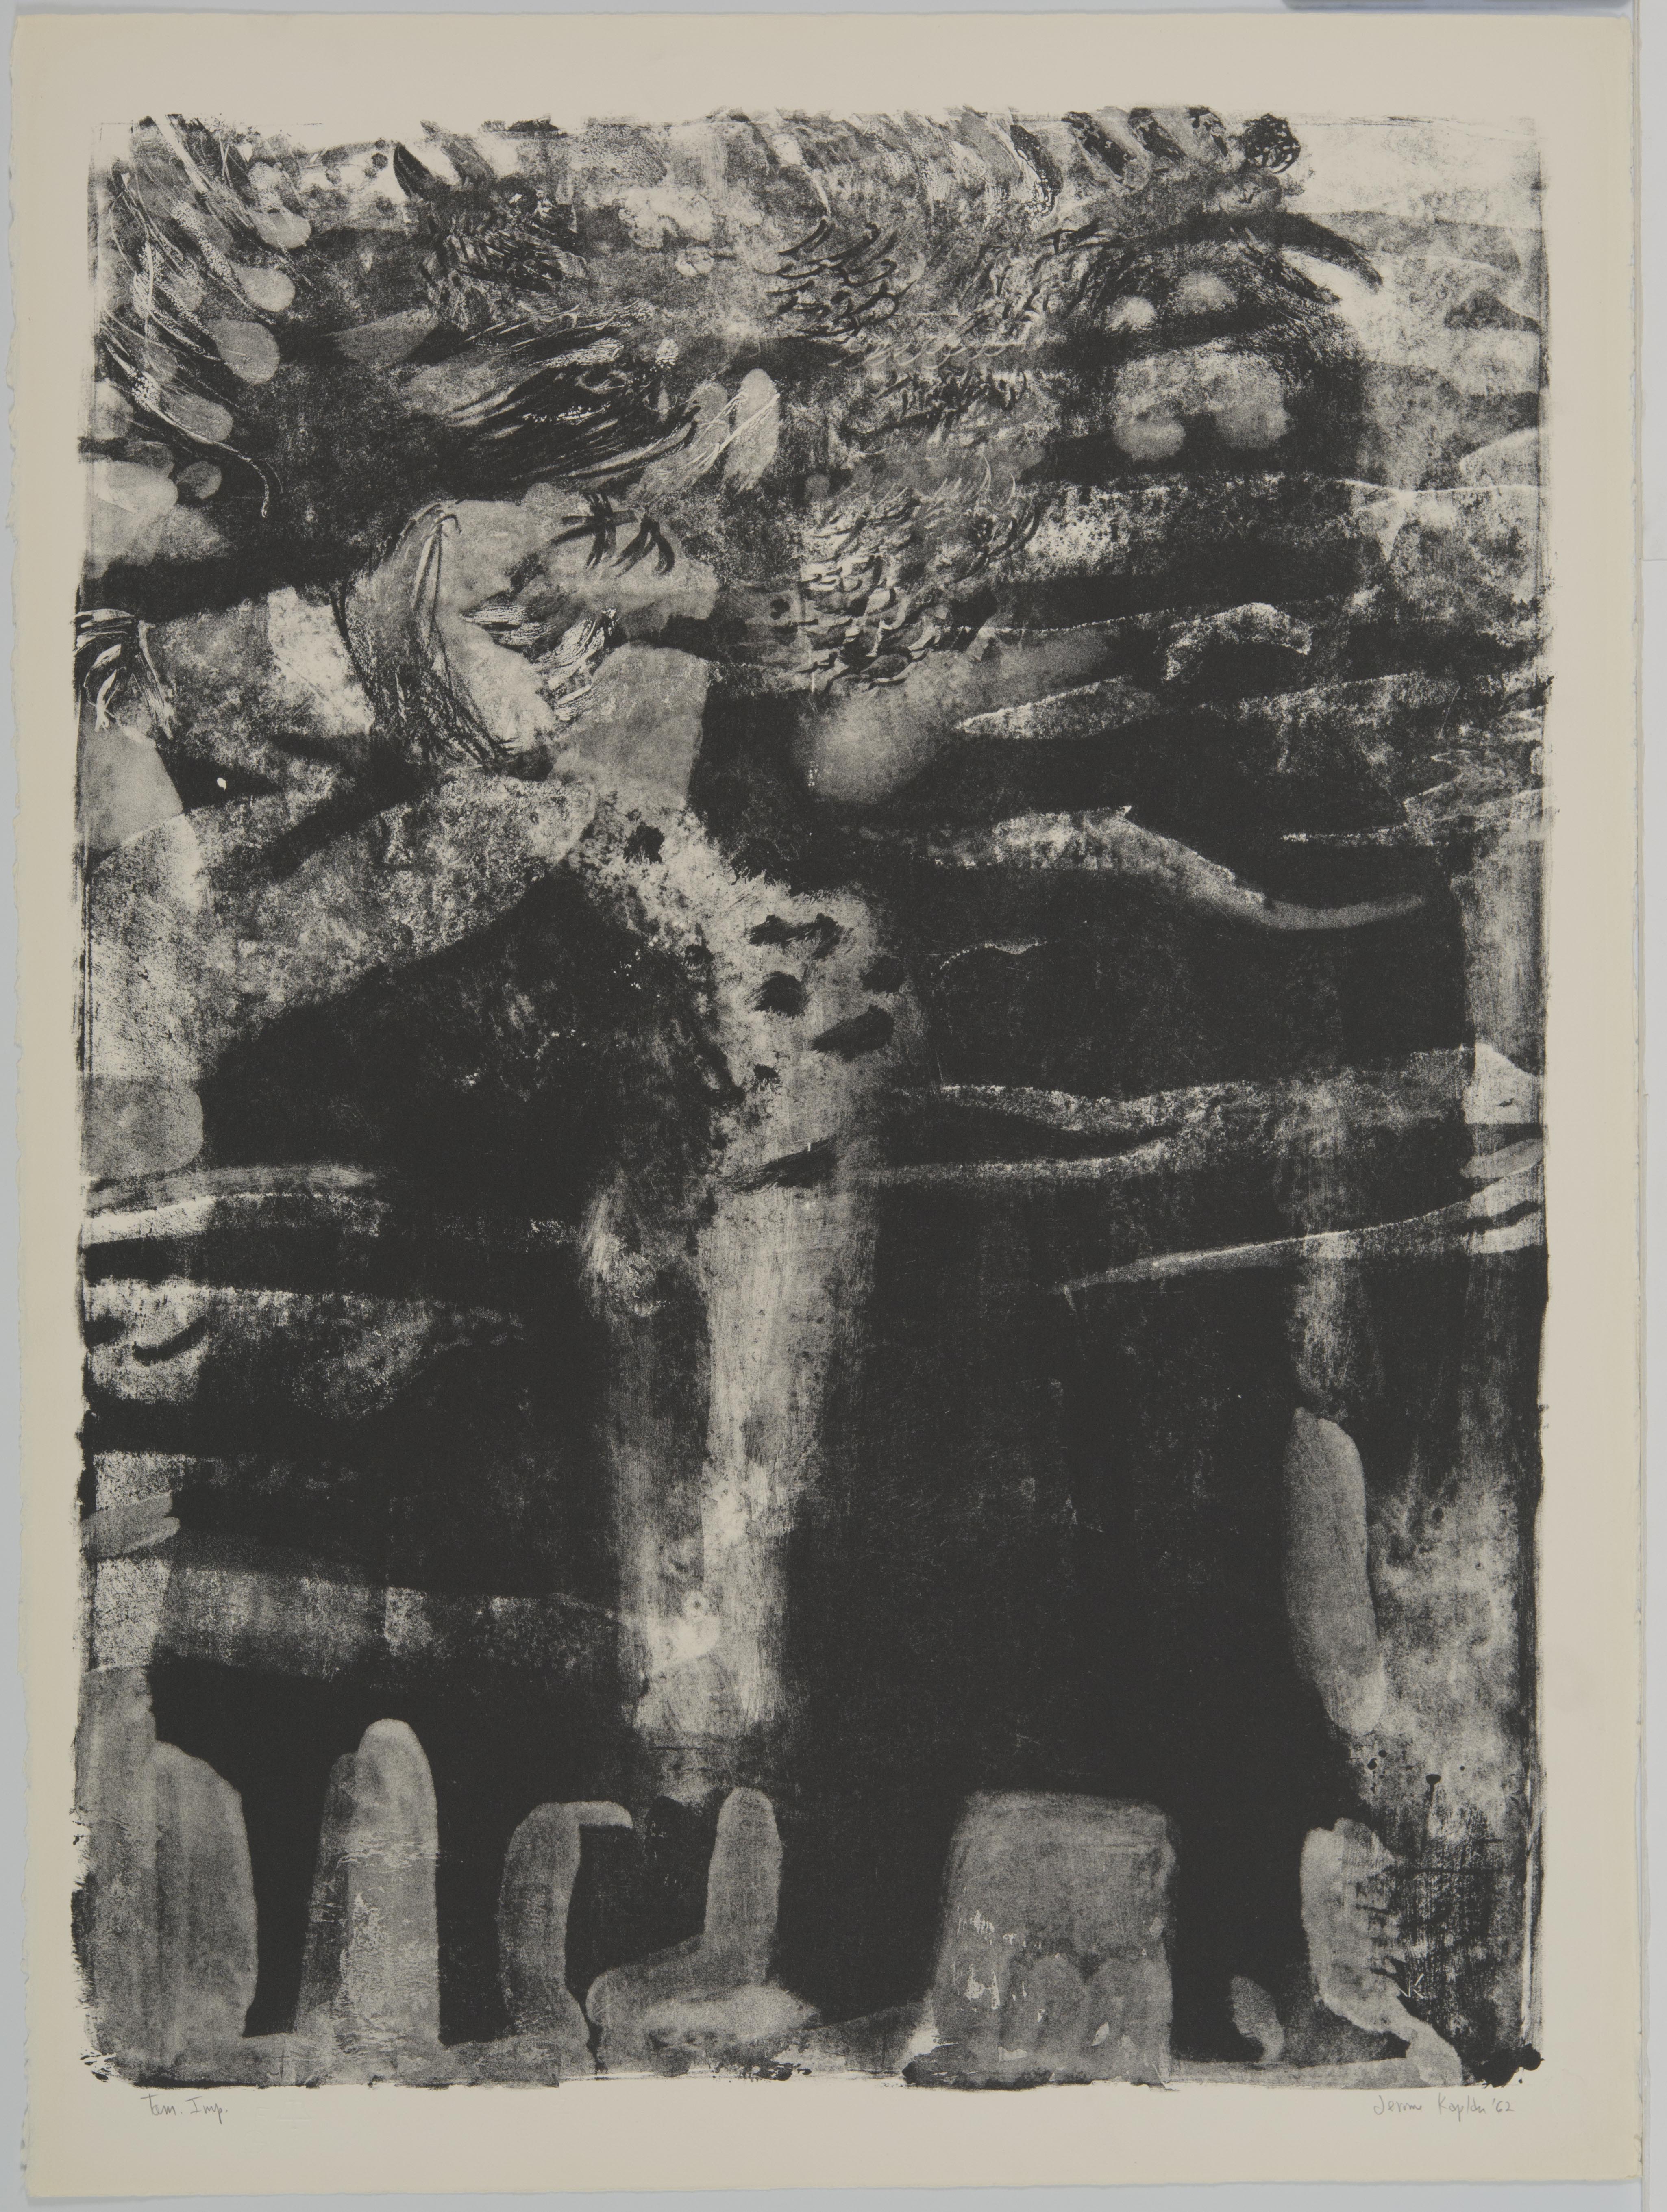 Jerome Kaplan, Artist Joe Zirker, Printer Kapparah, March 6-9, 1962